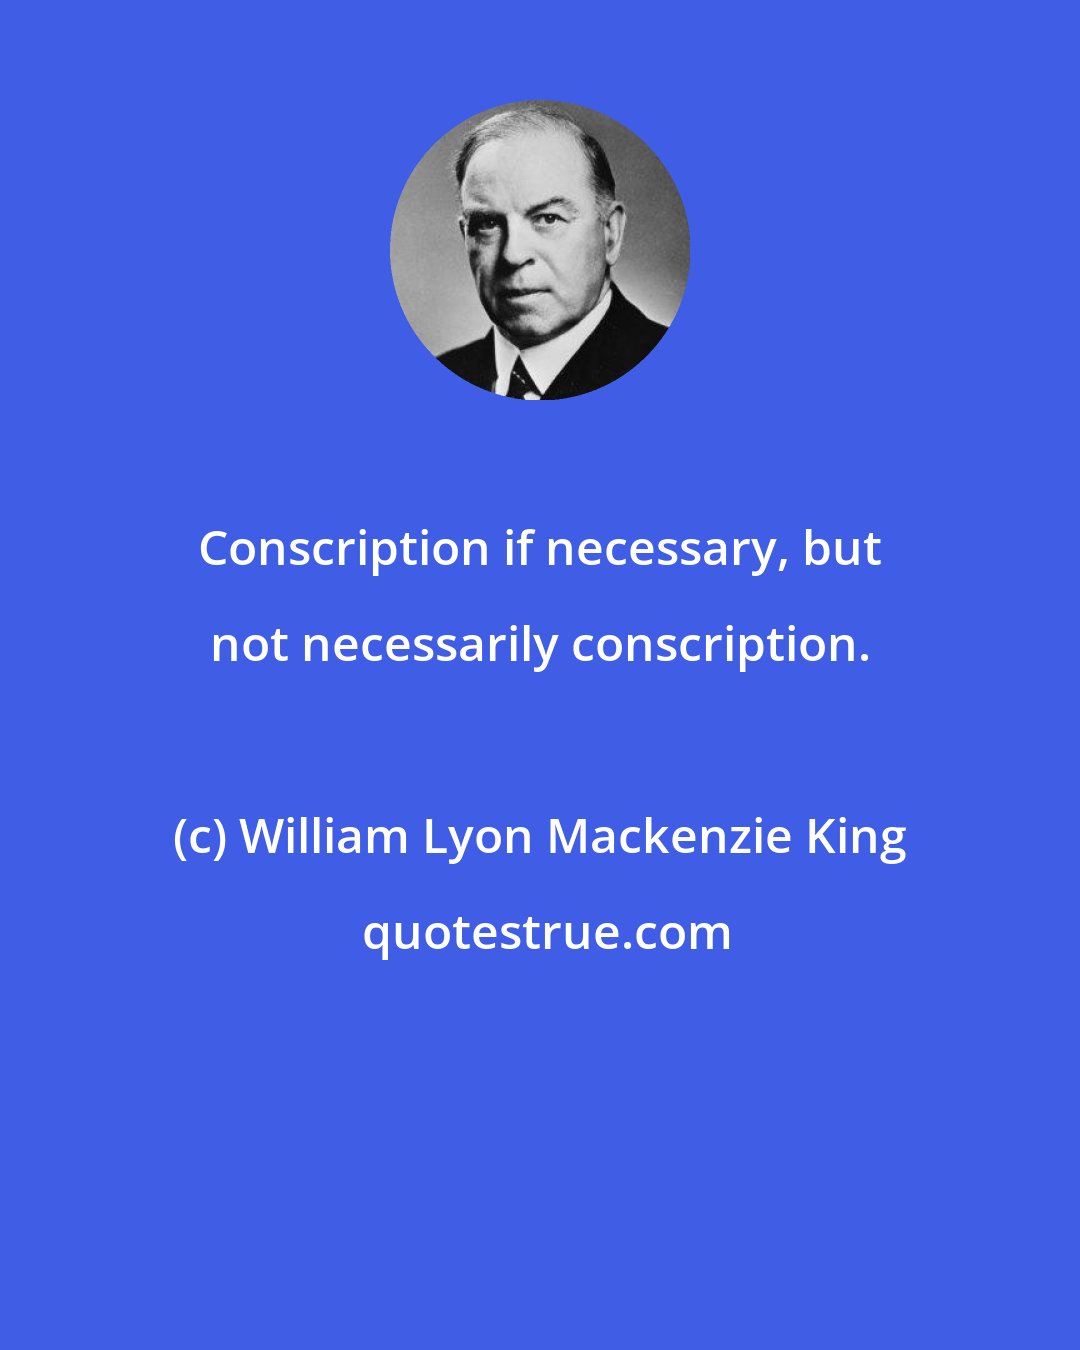 William Lyon Mackenzie King: Conscription if necessary, but not necessarily conscription.